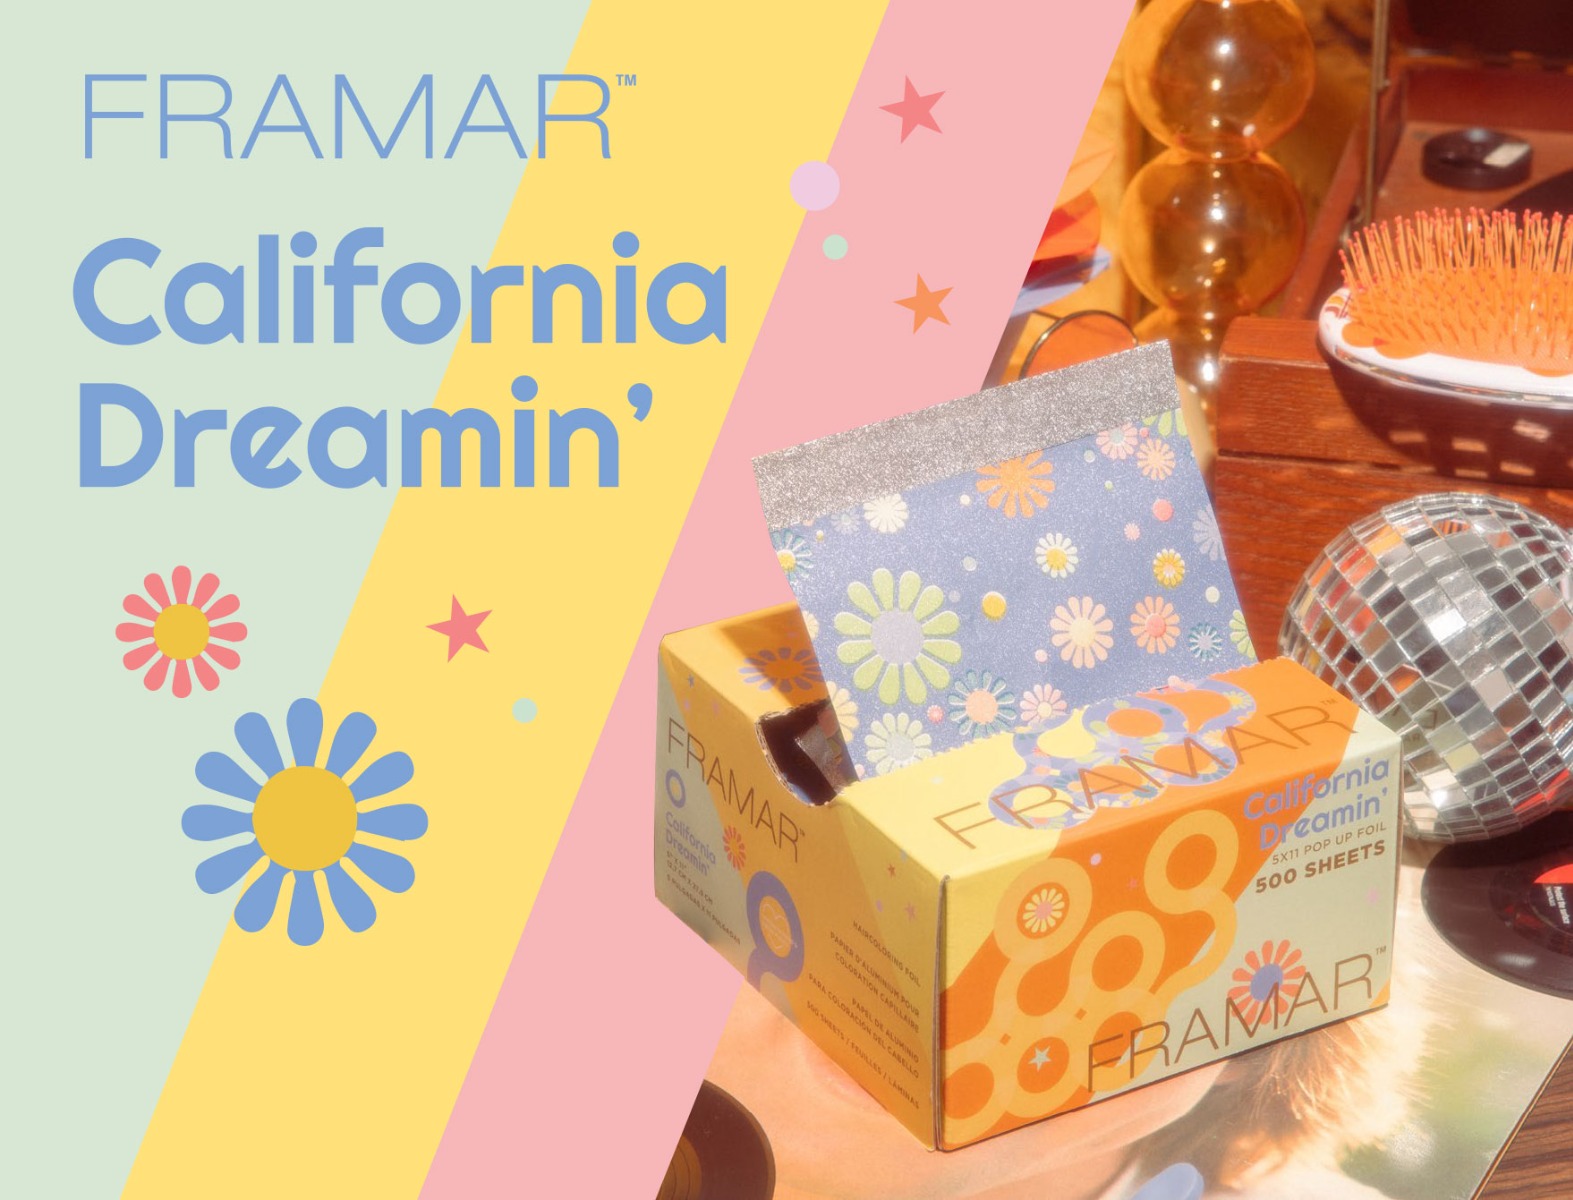 Framar California Dreamin'